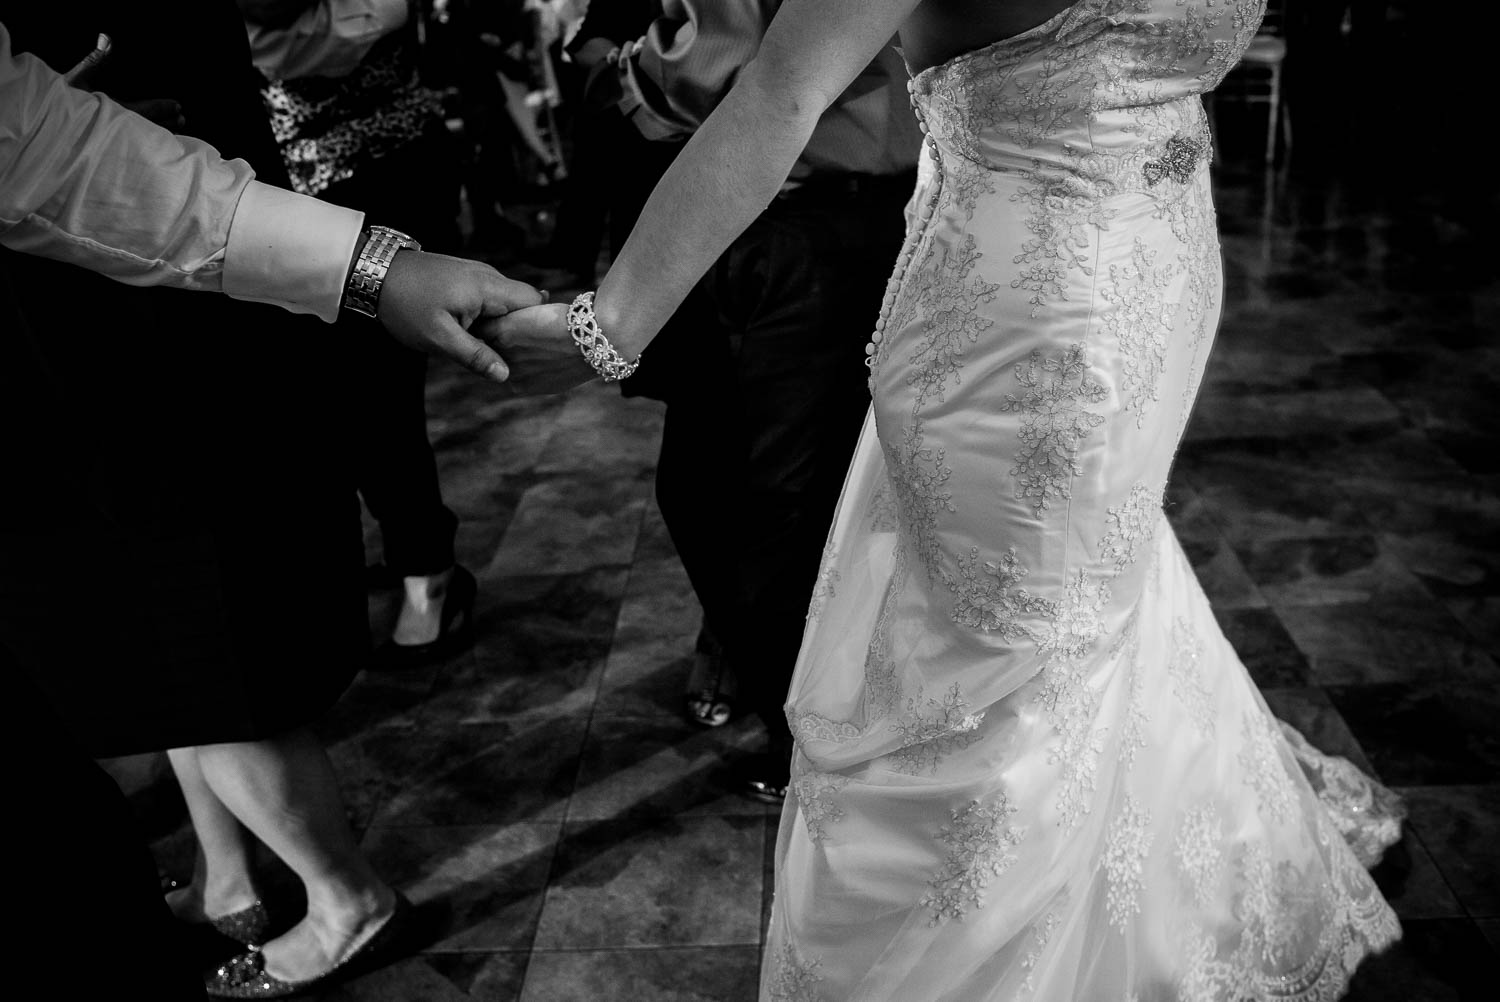 Couple cross wedding reception dance floor at Granberry Hills Wedding, Philip Thomas Photography